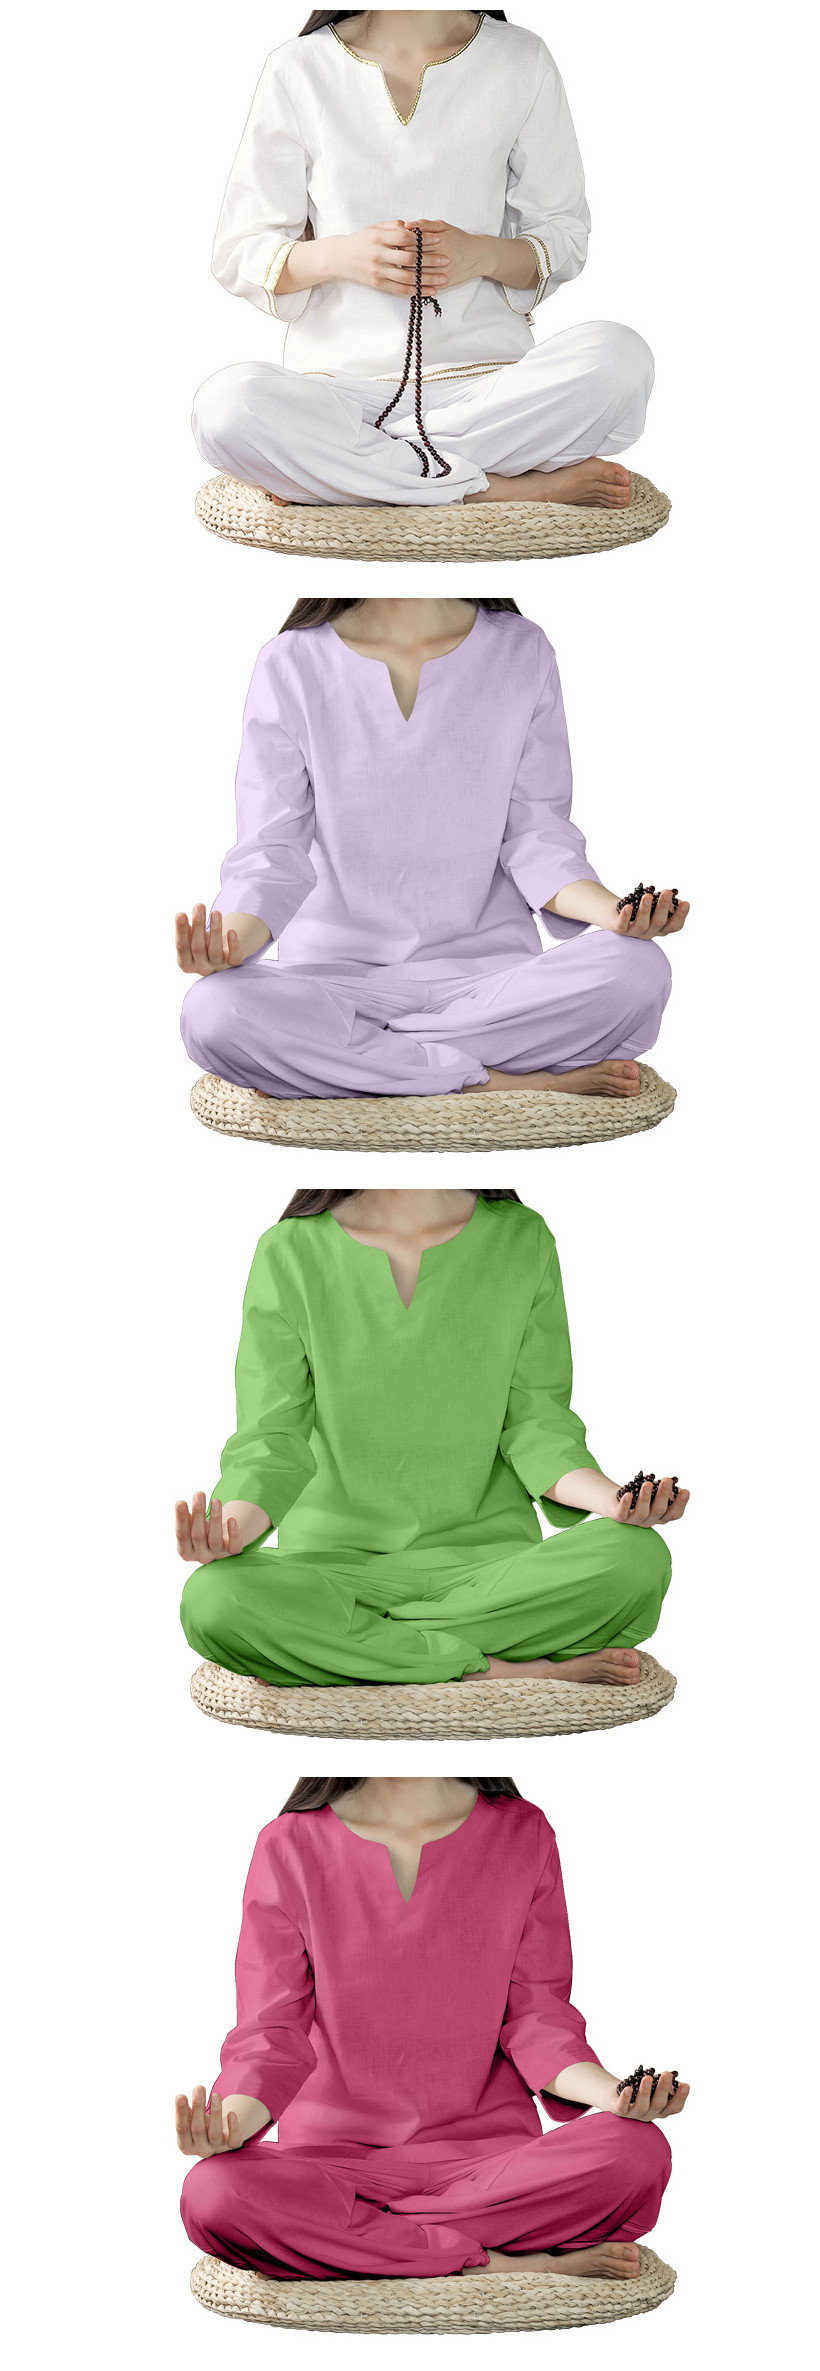 Women-Yoga-Suit-Cotton-Linen-Meditation-Clothing-Set-Lady-Dance-Fitness-Clothes-Sportswear-1078849-6